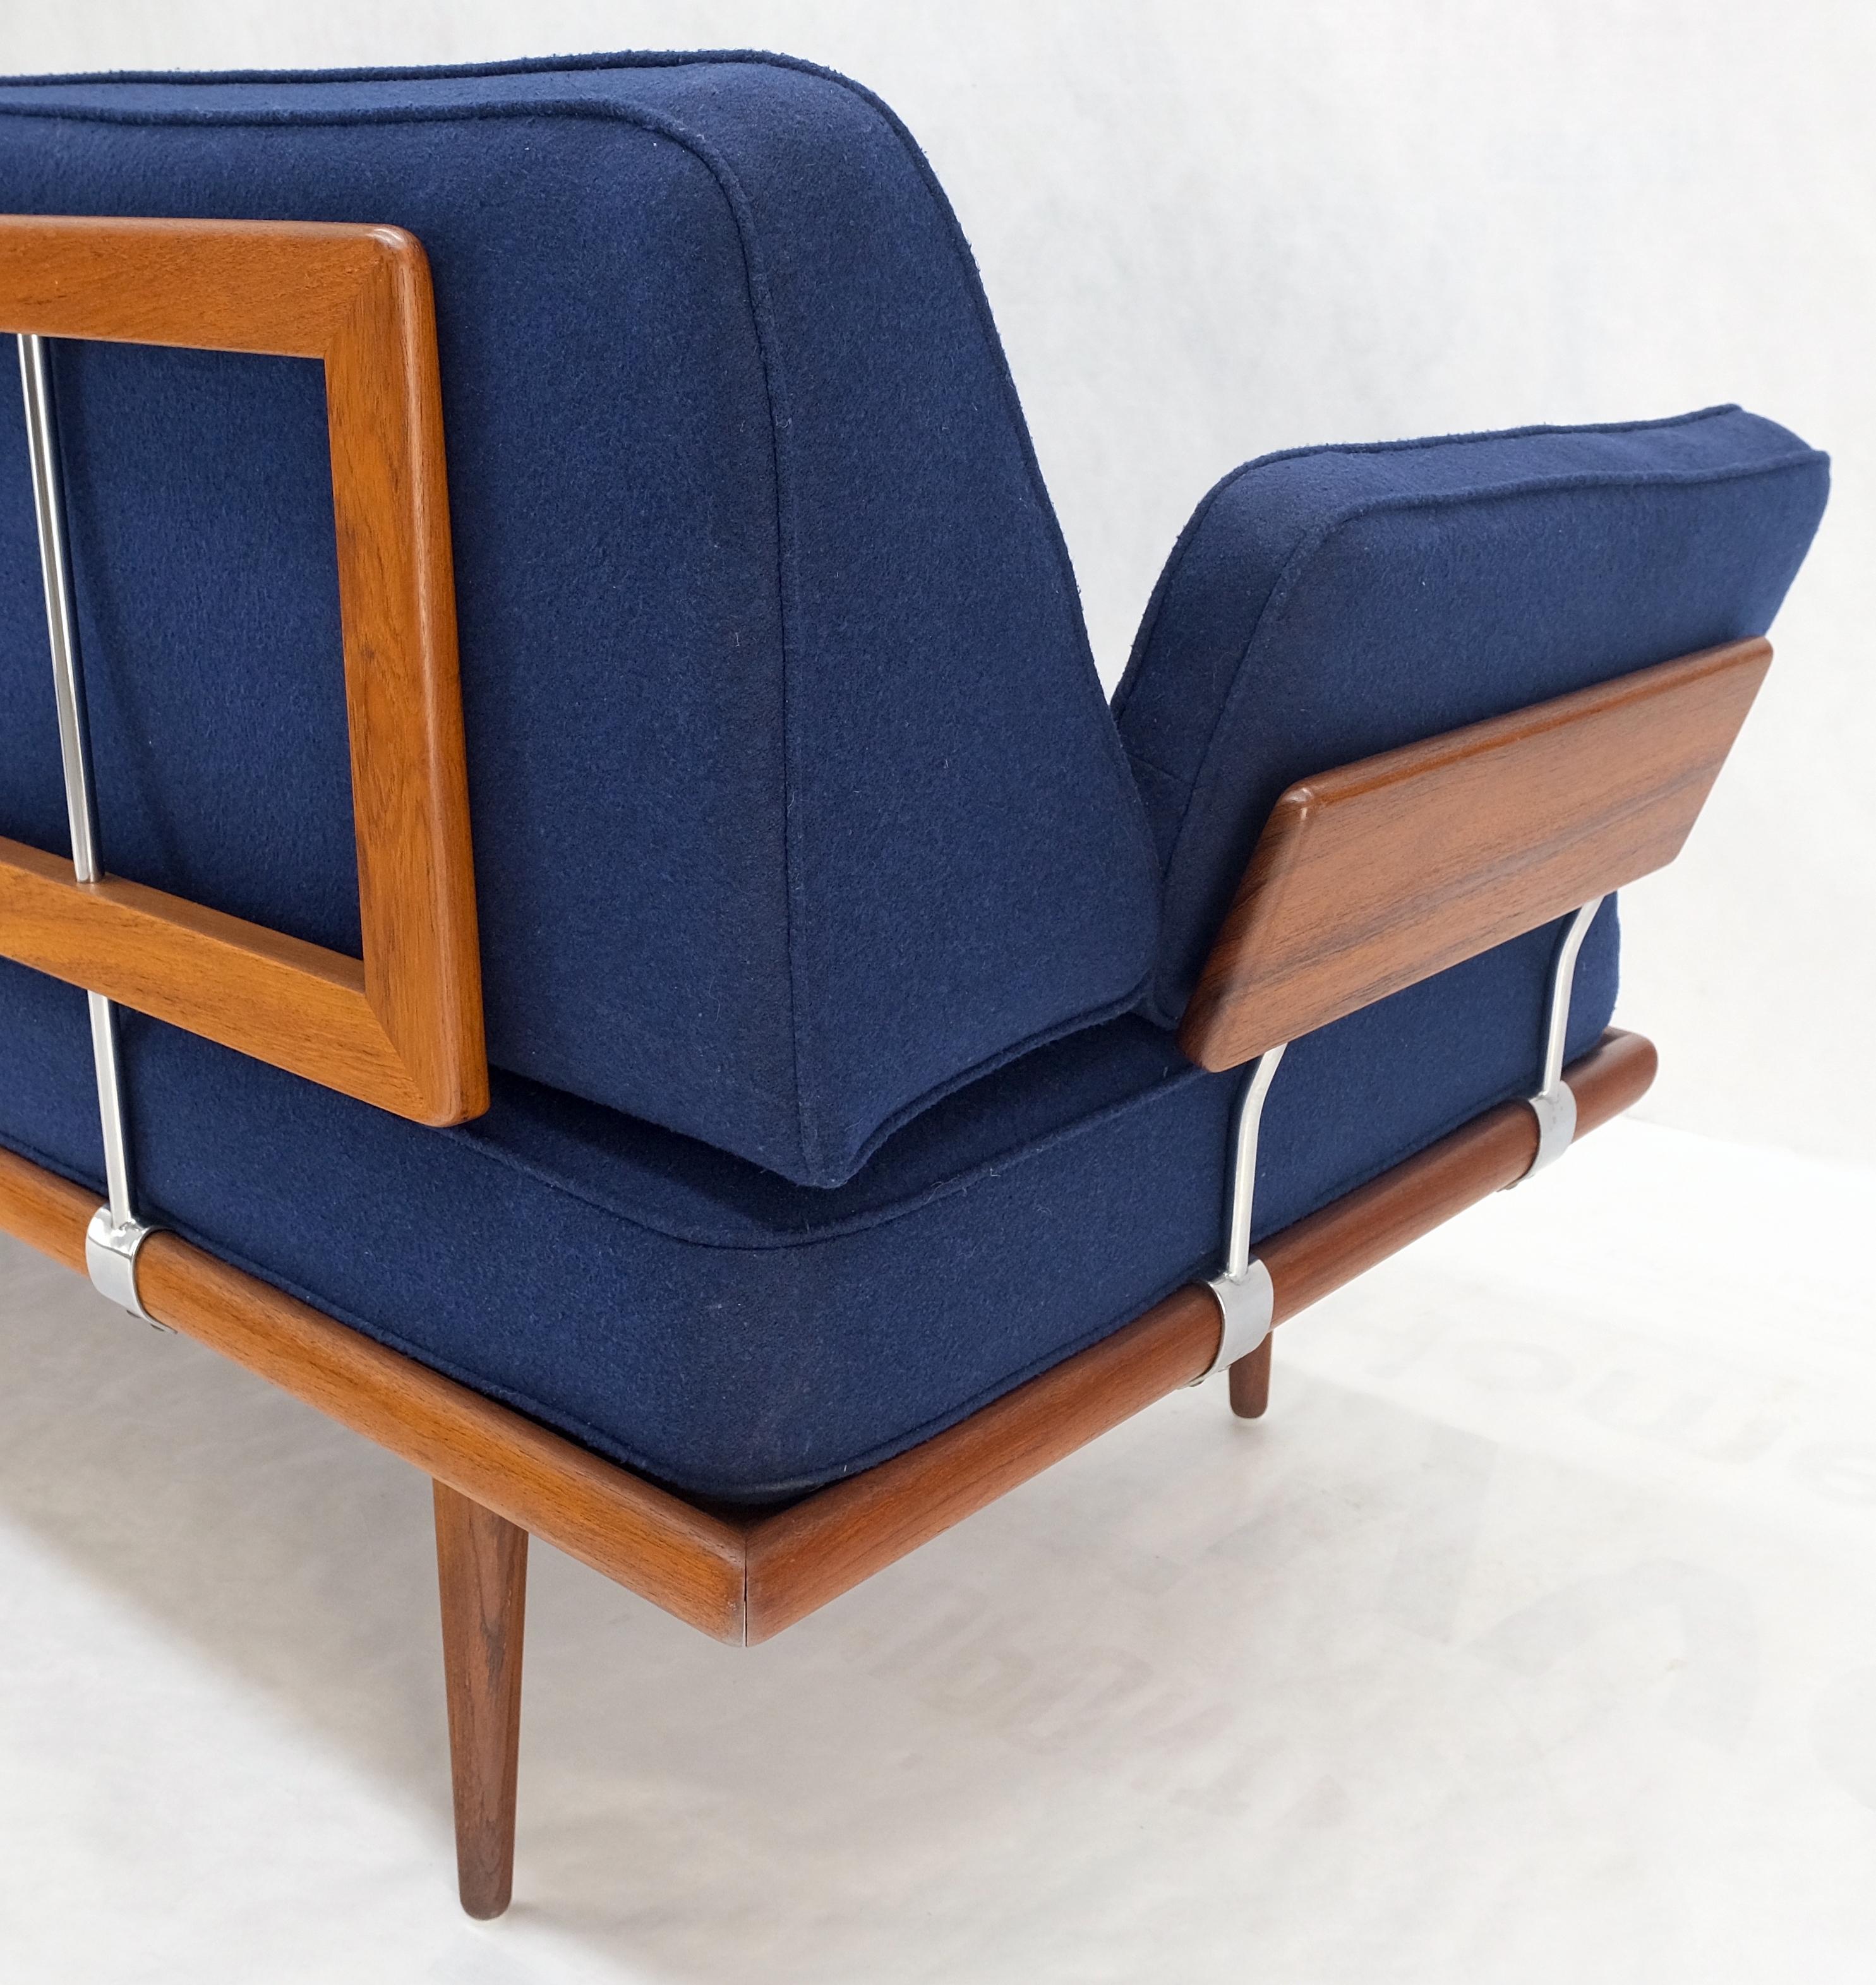 Peter Hvidt Solid Teak Sofa New Blue Wool Upholstery Original Springs Mint! For Sale 6